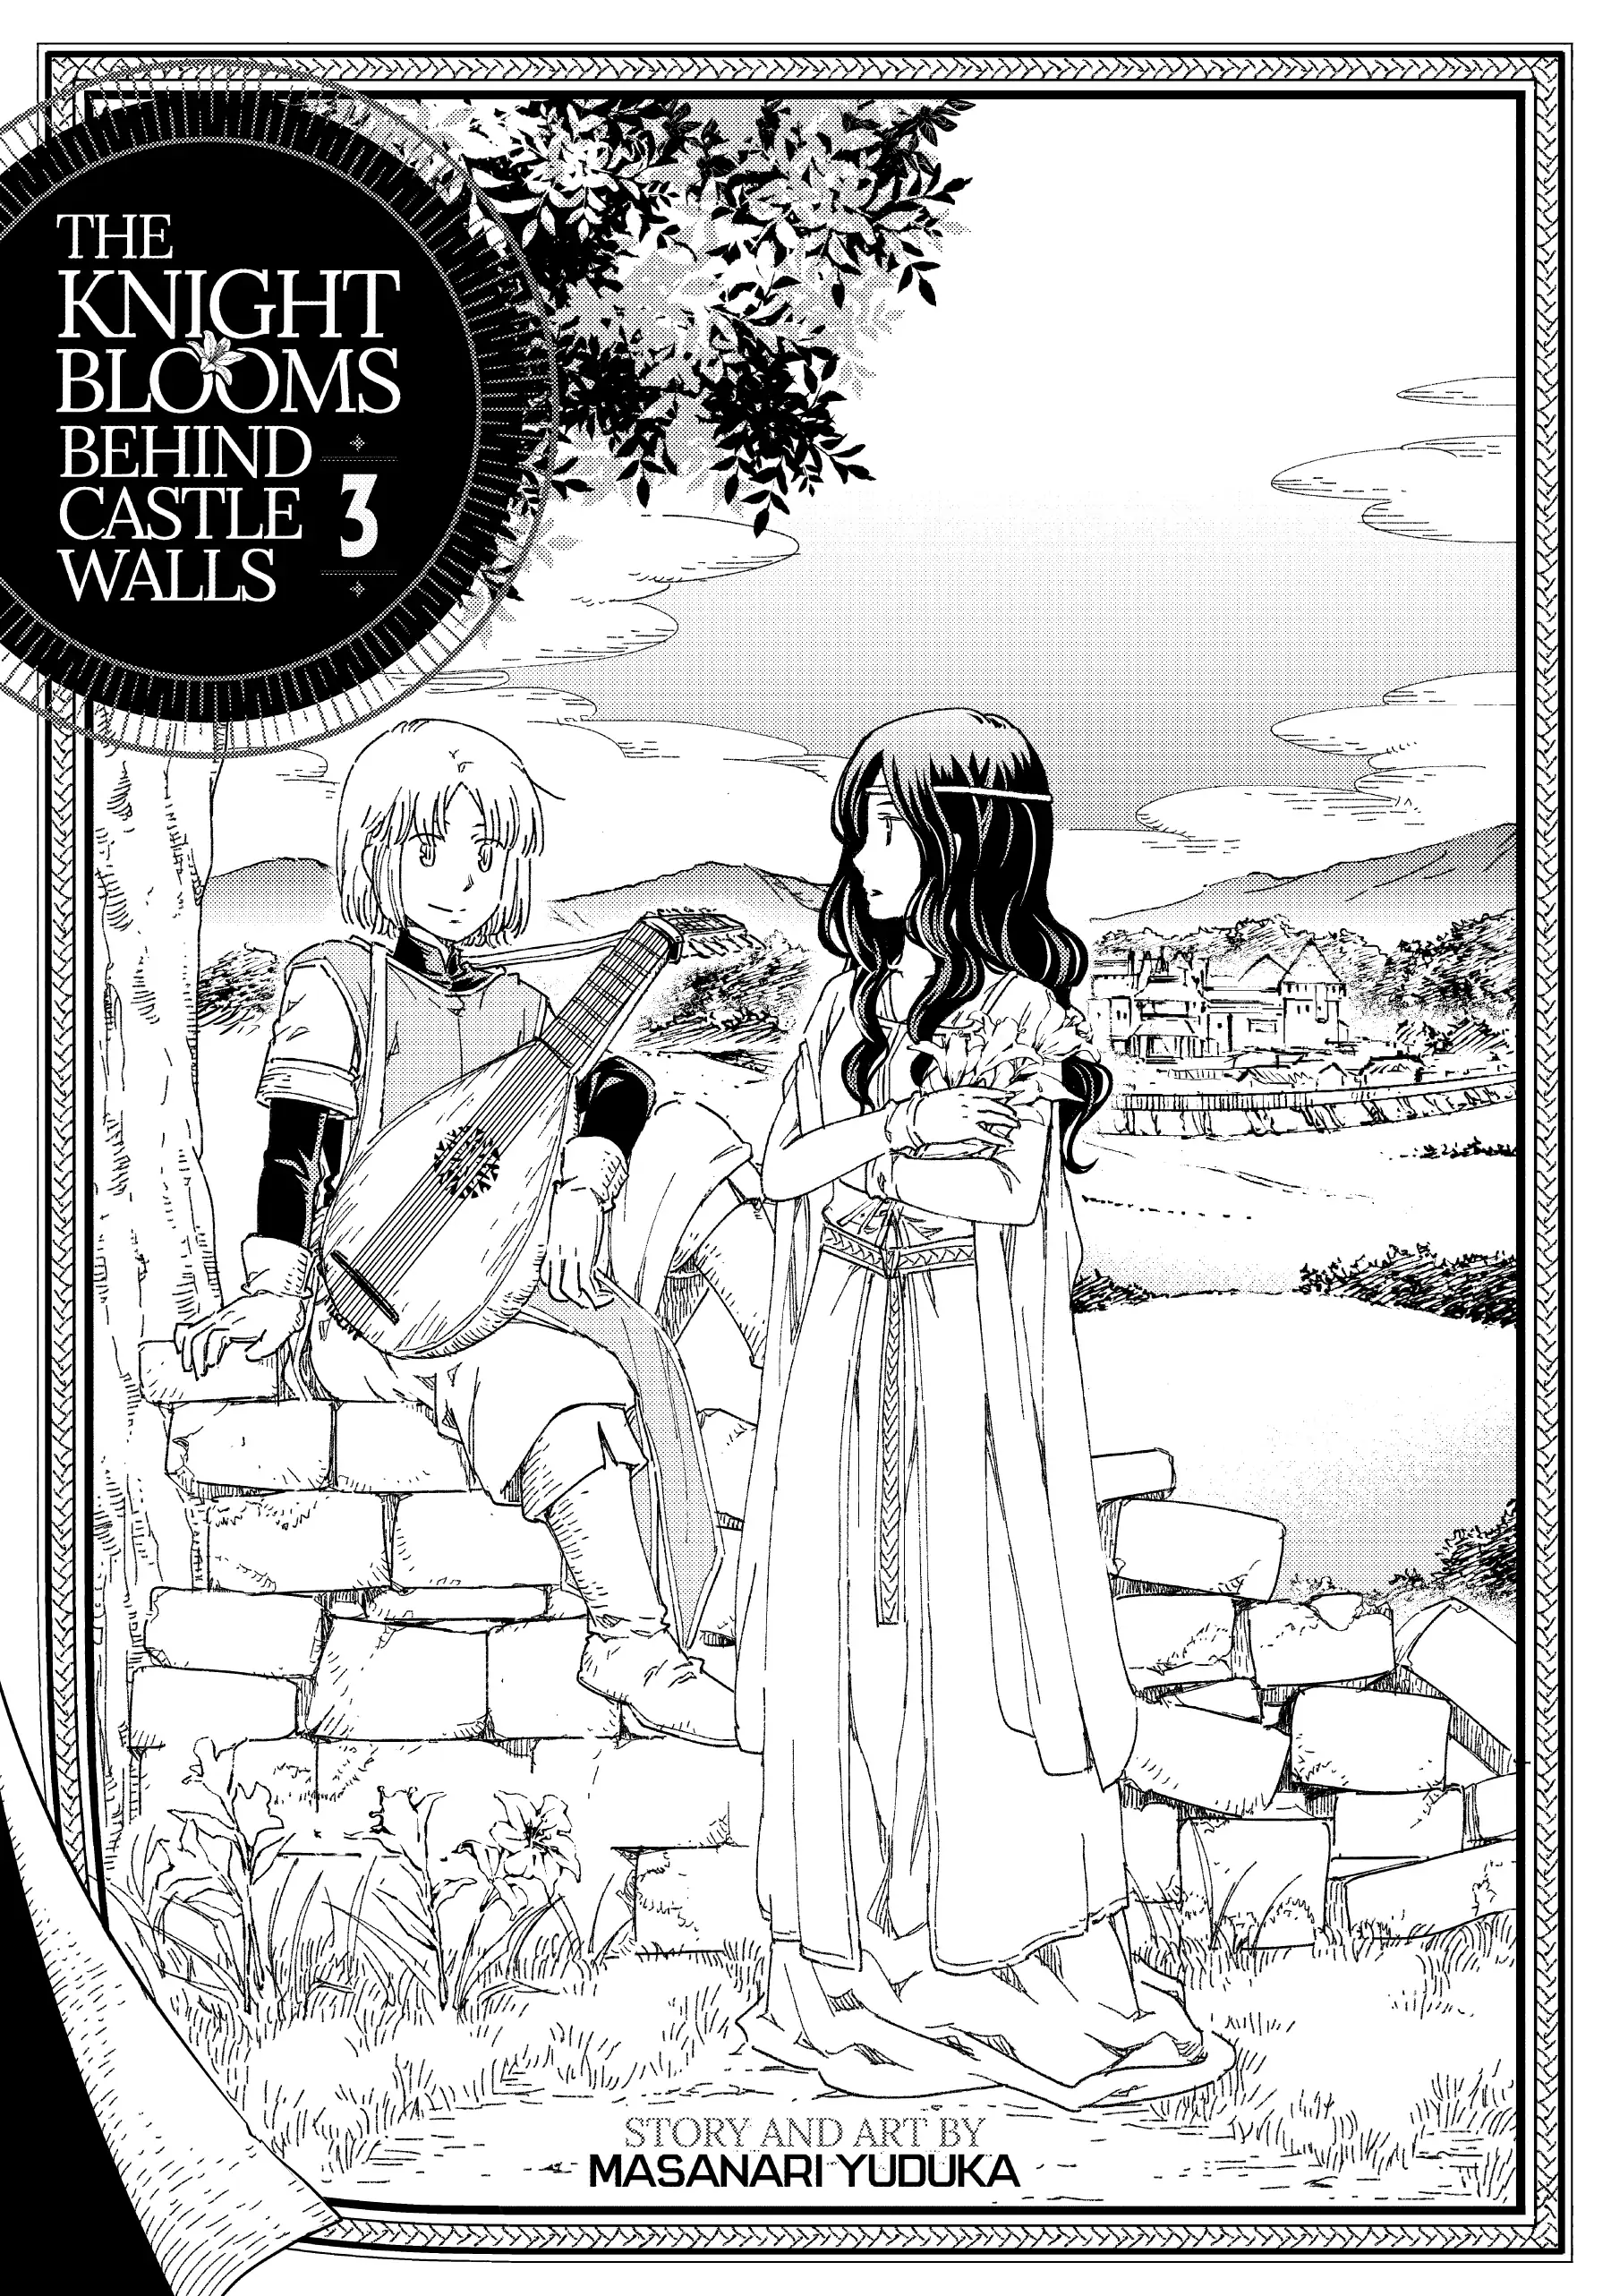 The Knight Blooms Behind Castle Walls by Yuduka, Masanari